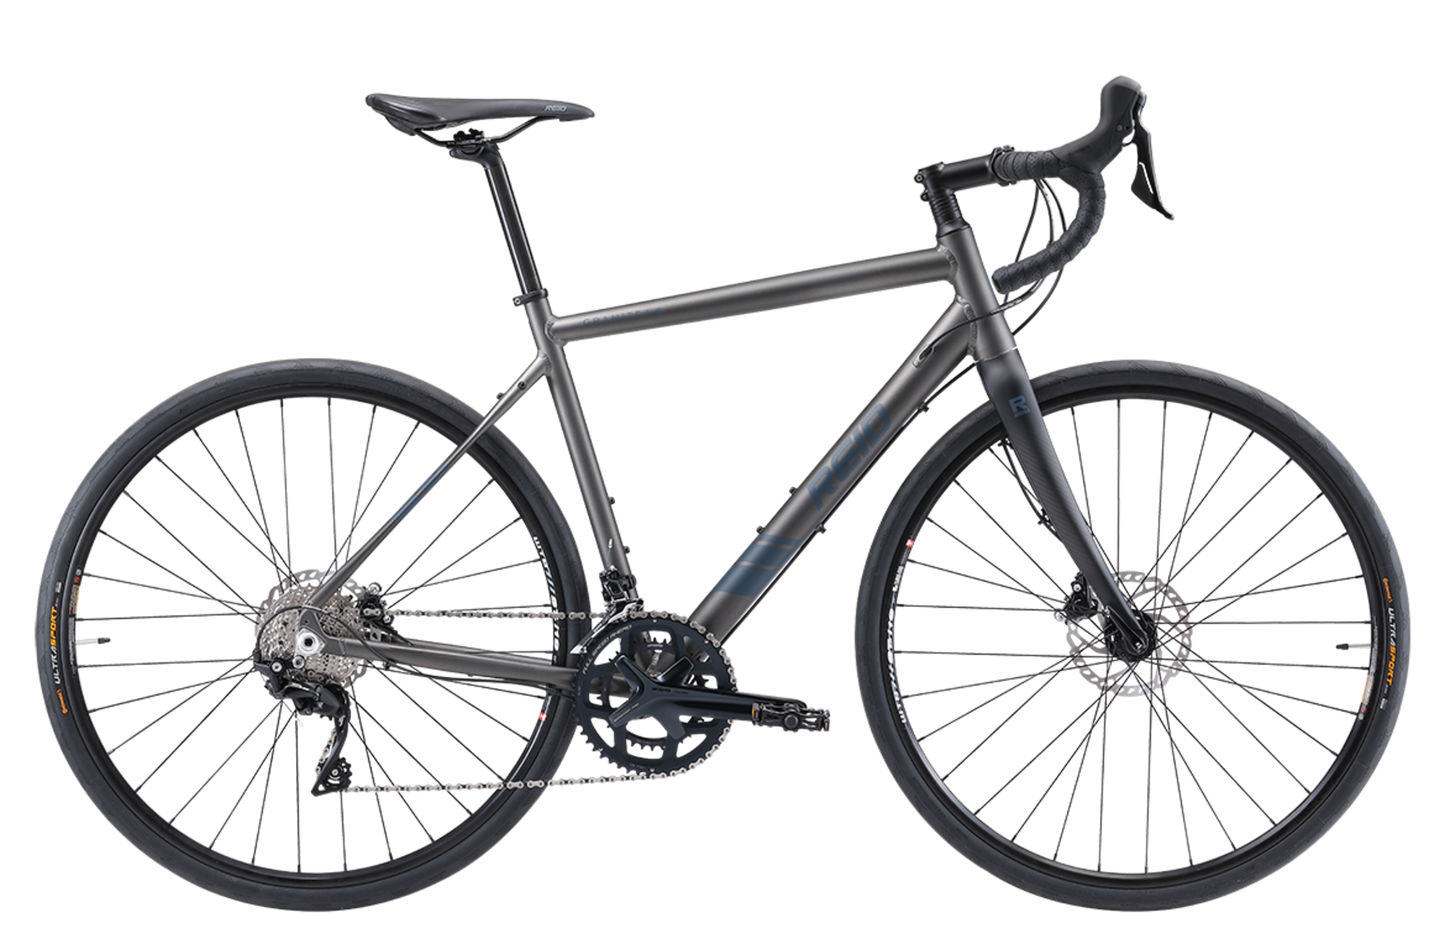 Granite 4.0 Gravel Bike in Grey with Shimano 11-speed gearing from Reid Cycles Australia